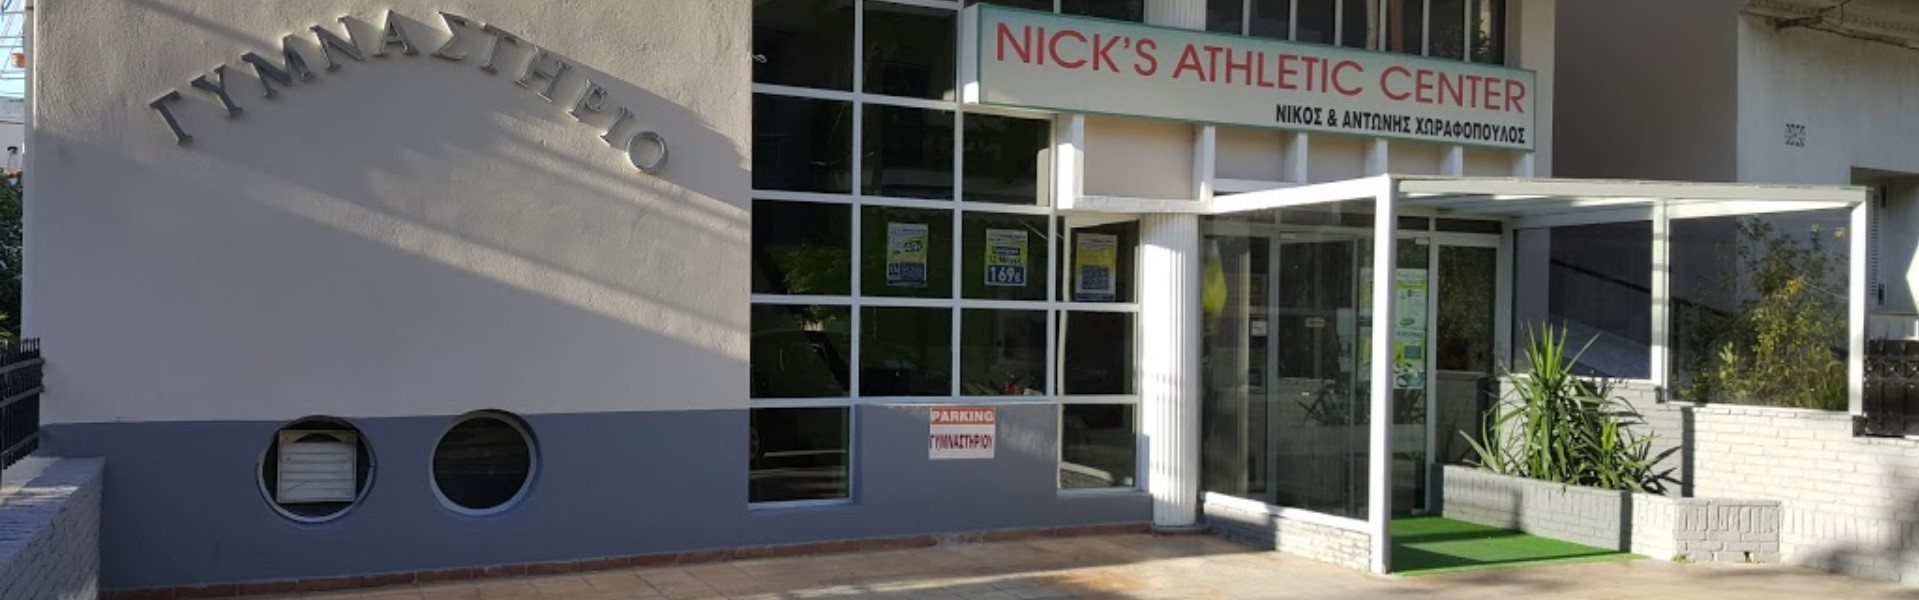 nicks-athletic-center-eisodos-exo-1920x600